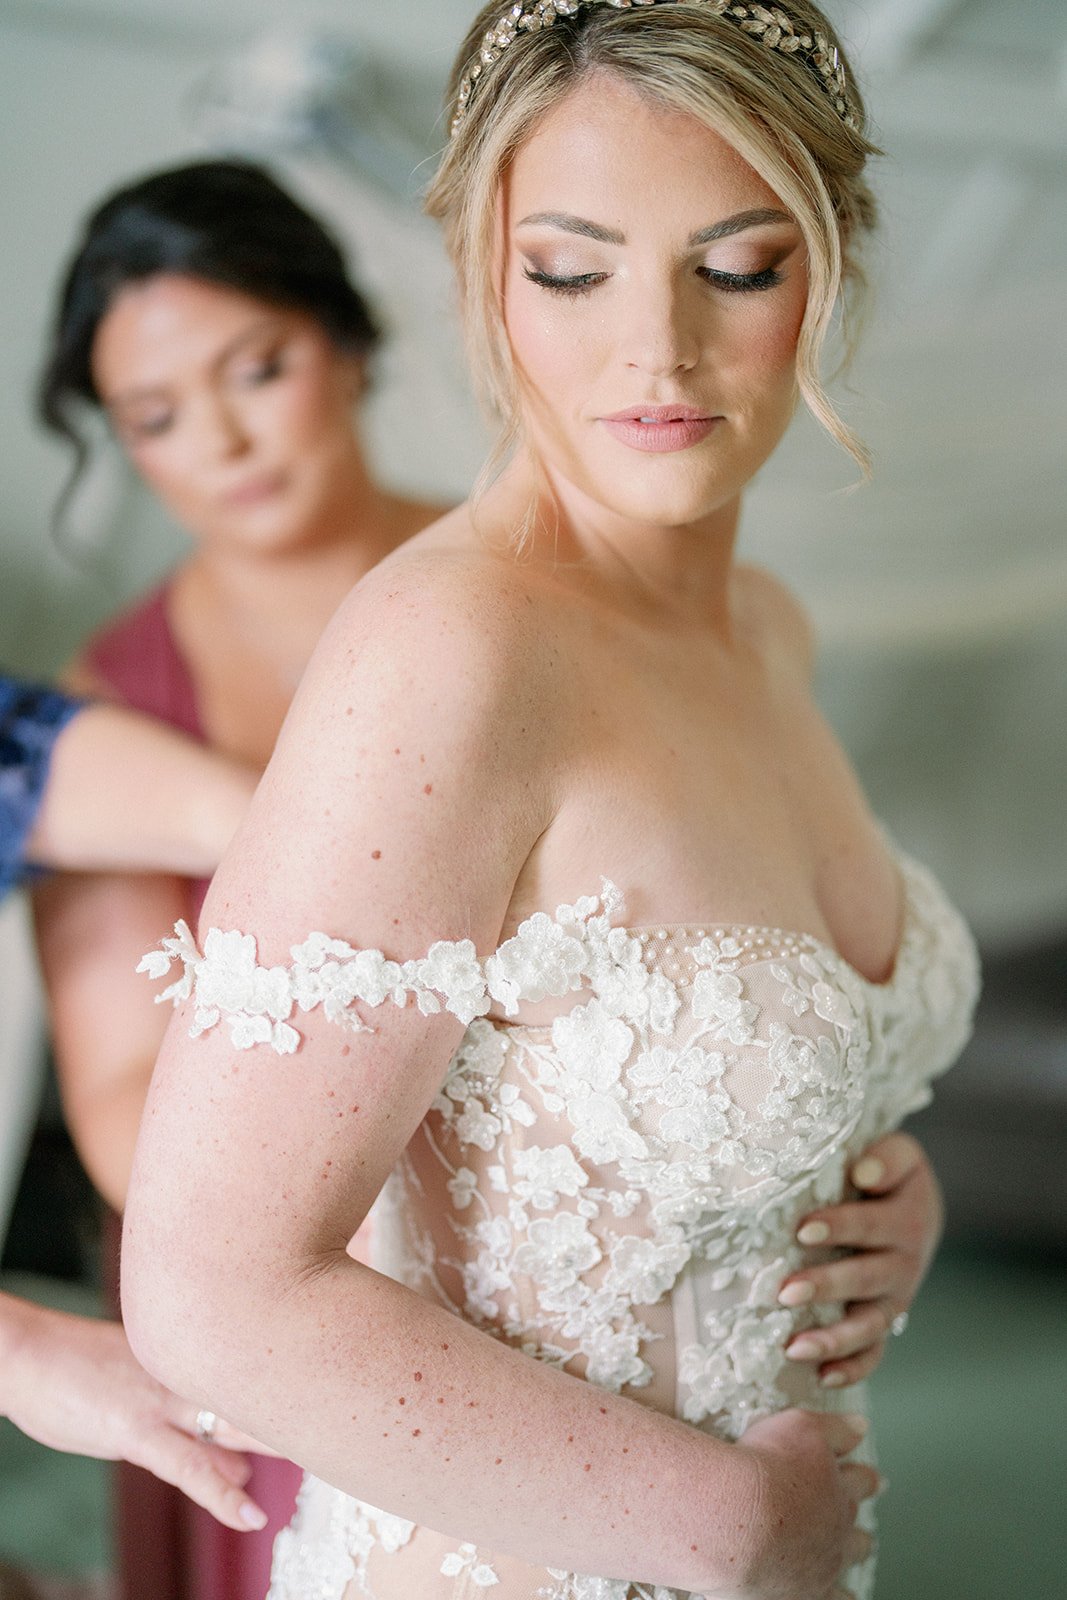 Bride getting dressed in strapless wedding dress